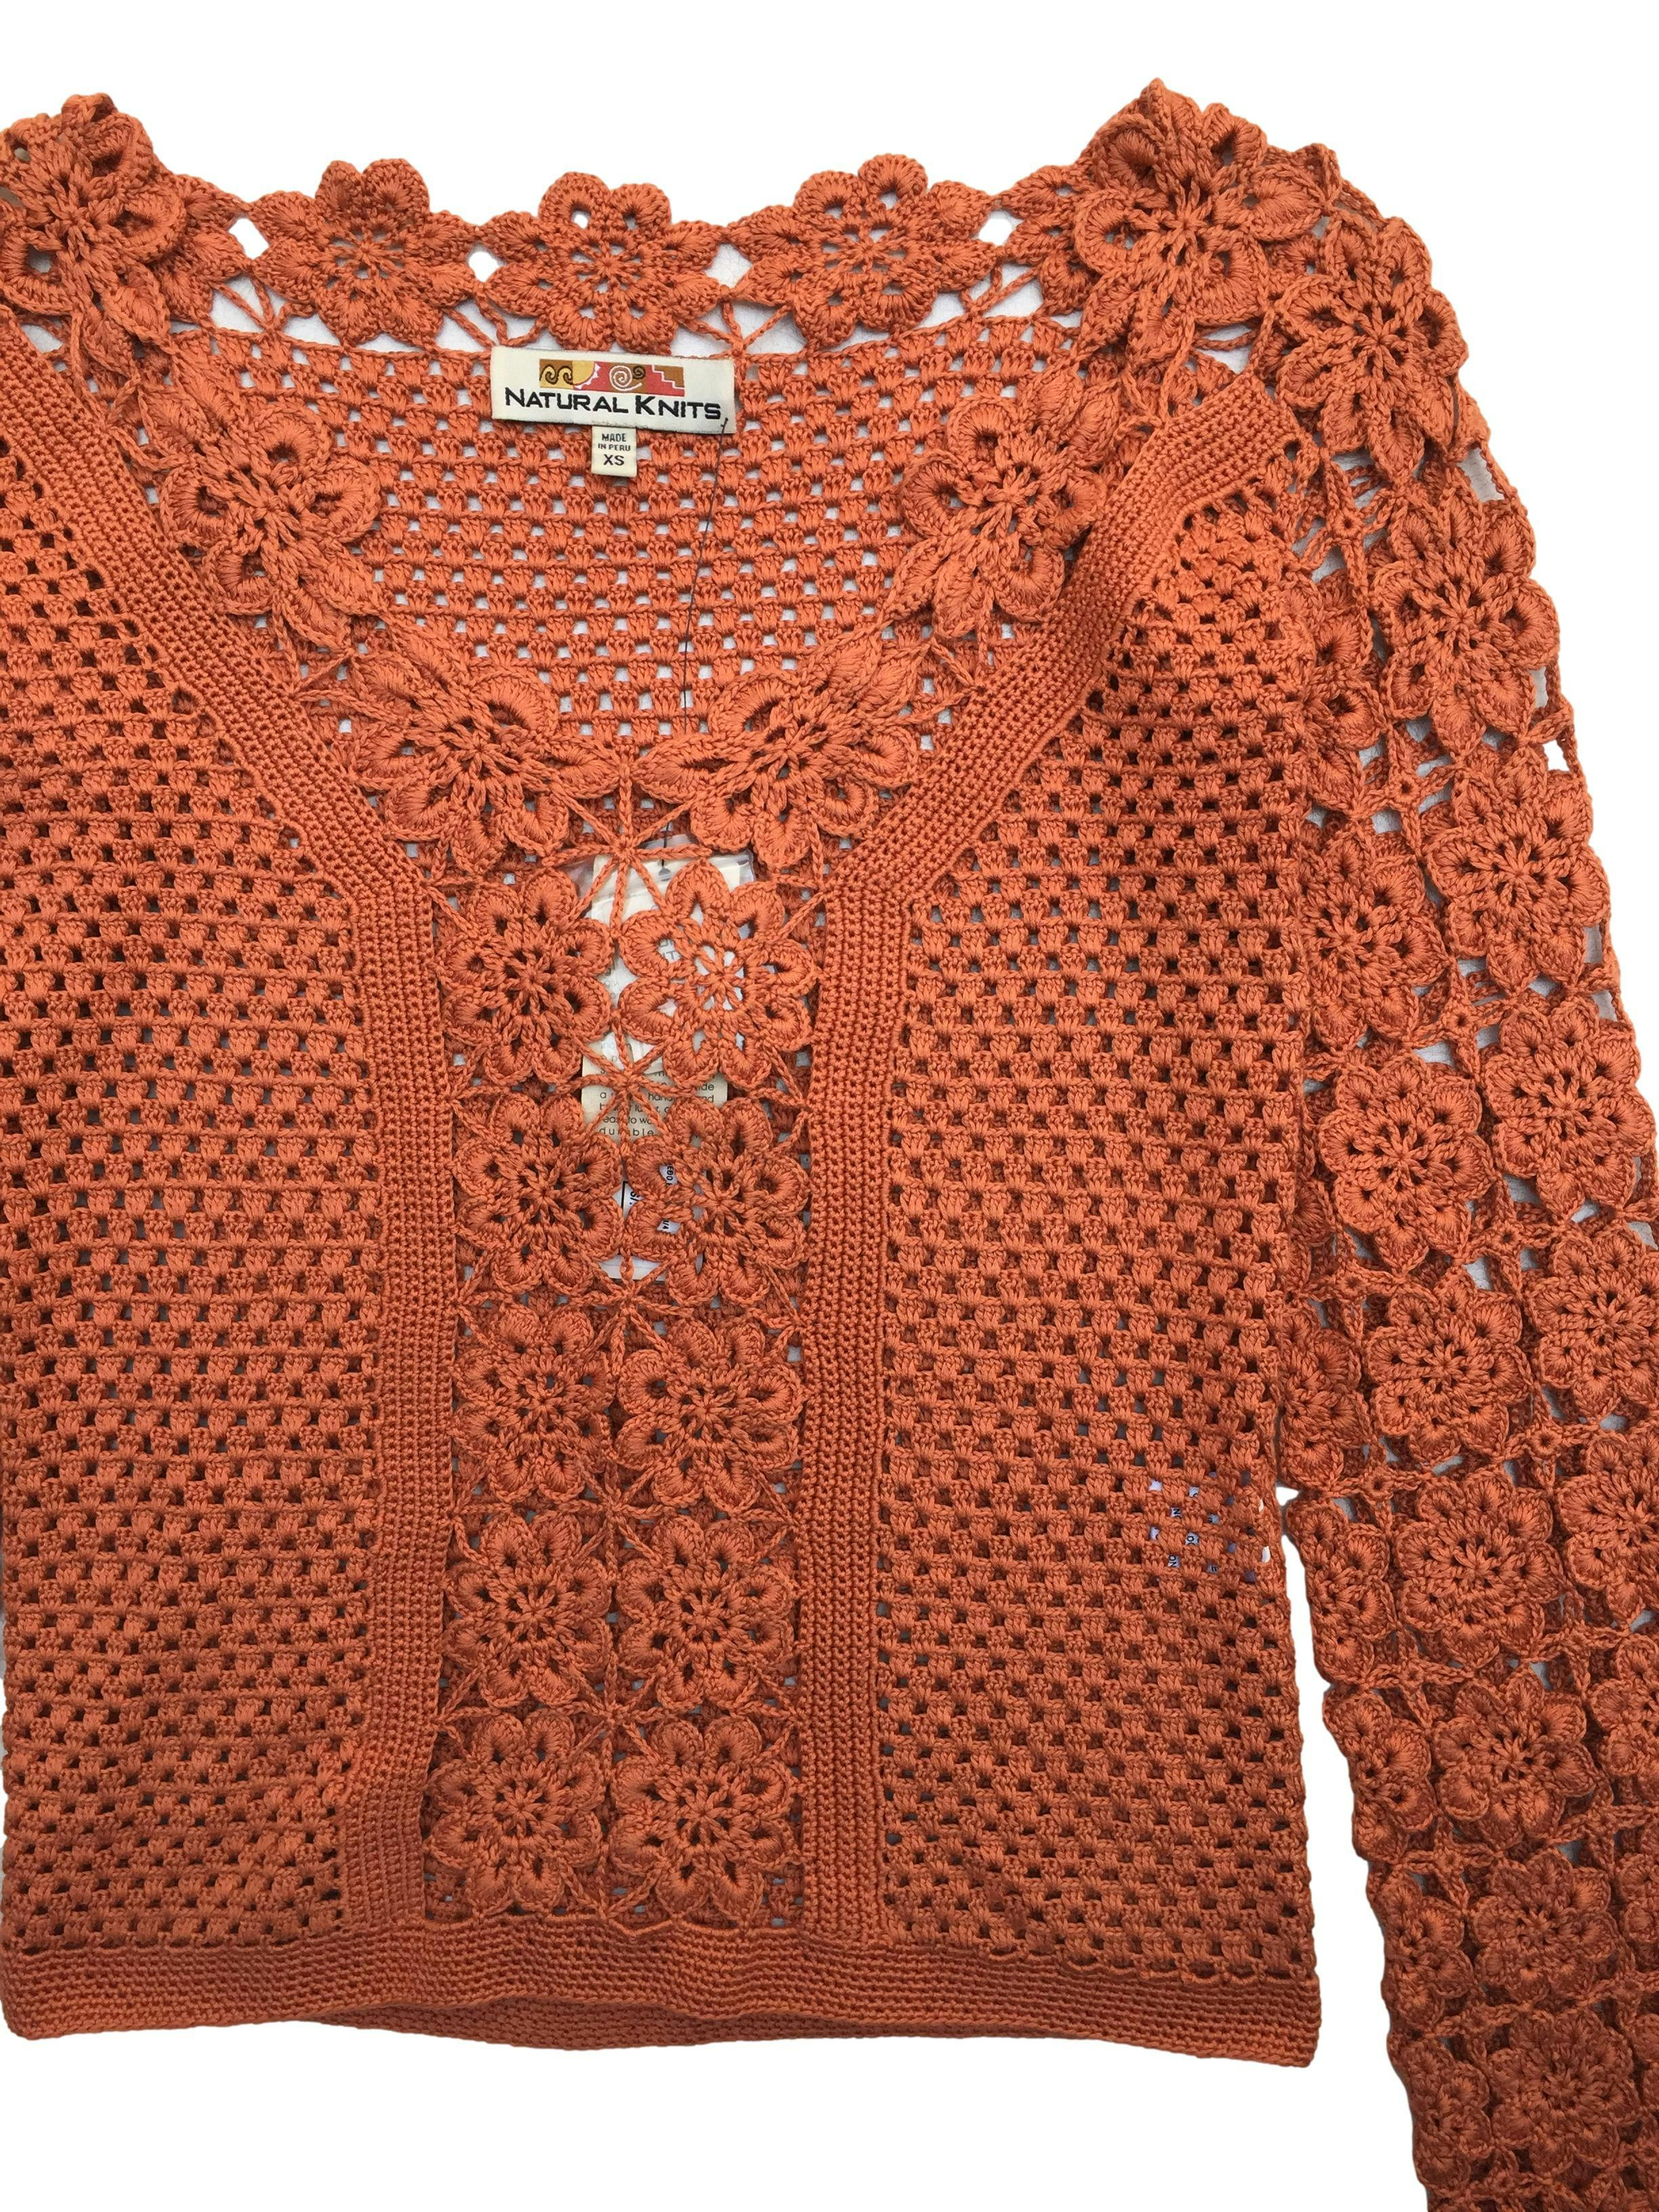 Chompa tejido crochet Natural Knits anaranjado, 100% algodón pima. Busto 85cm Largo 52cm . Nuevo con etiqueta. precio regular S/350